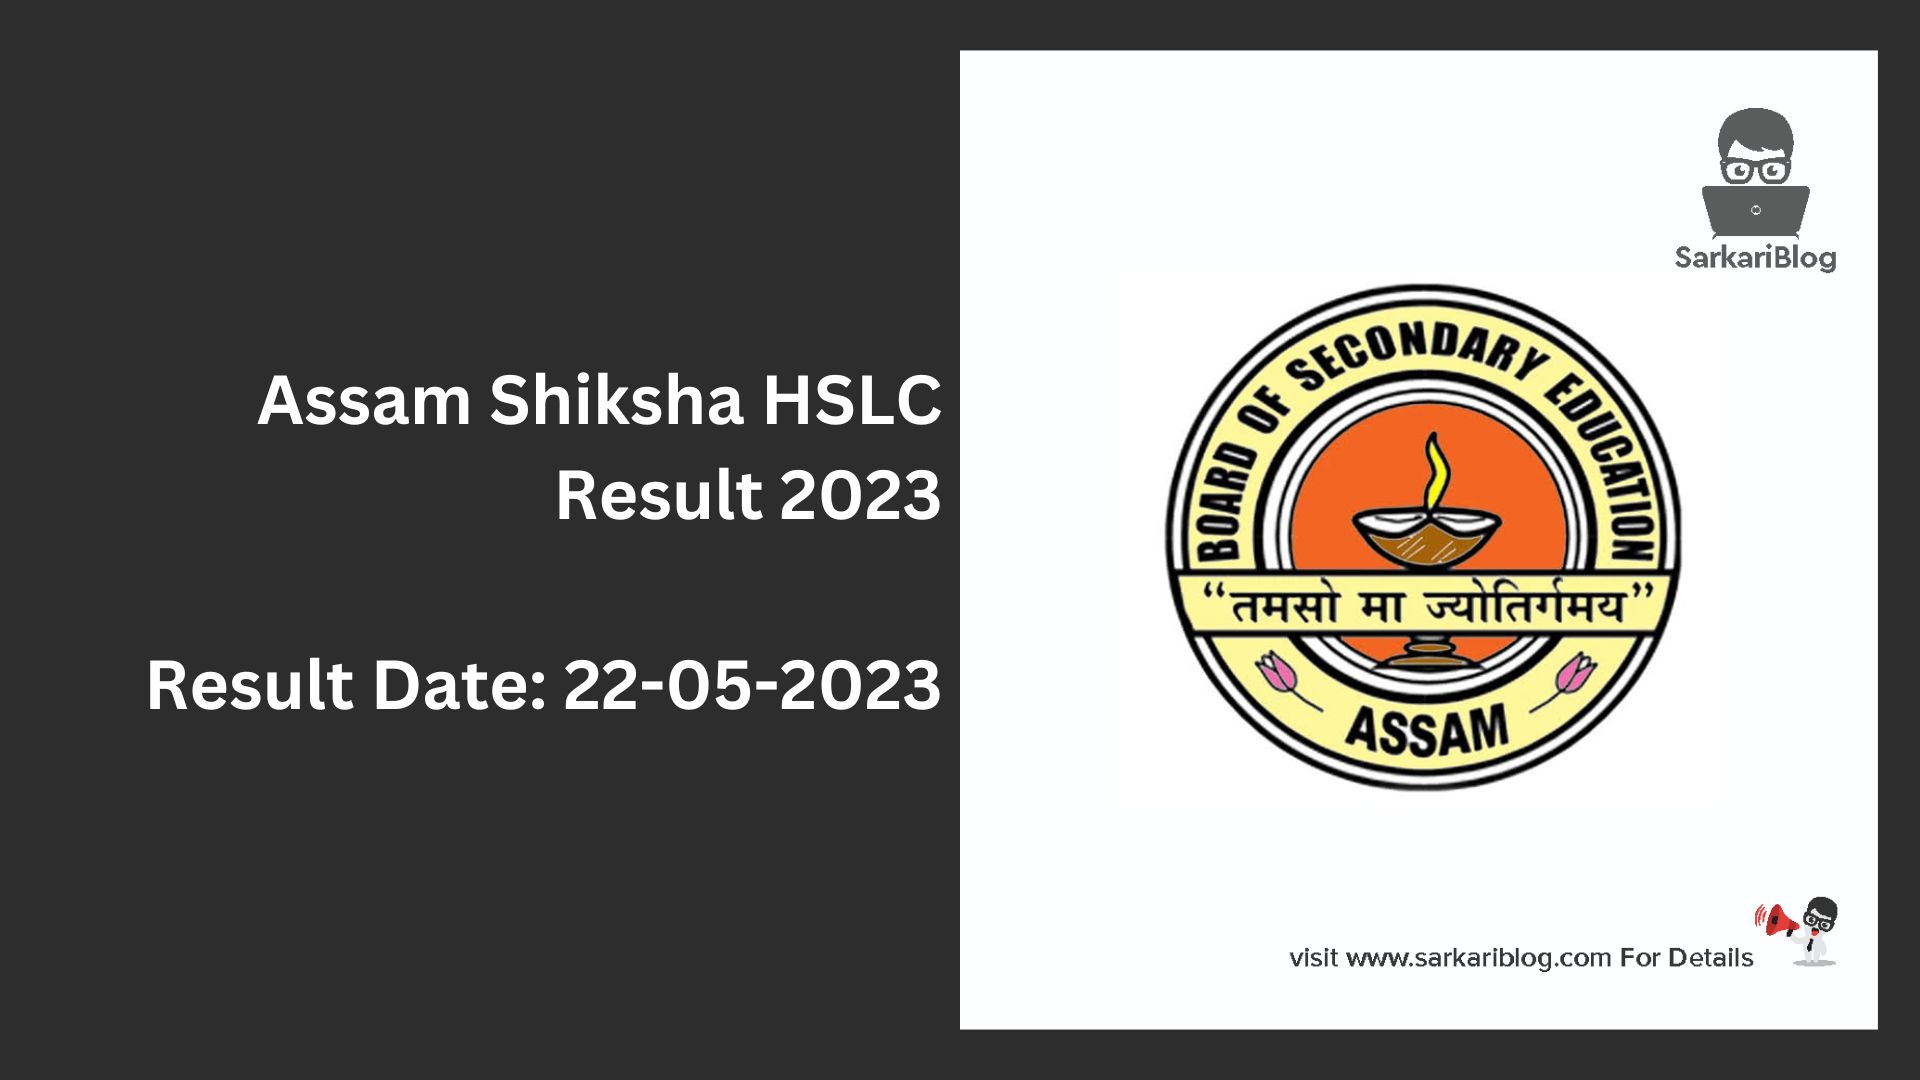 Assam Shiksha HSLC Result 2023